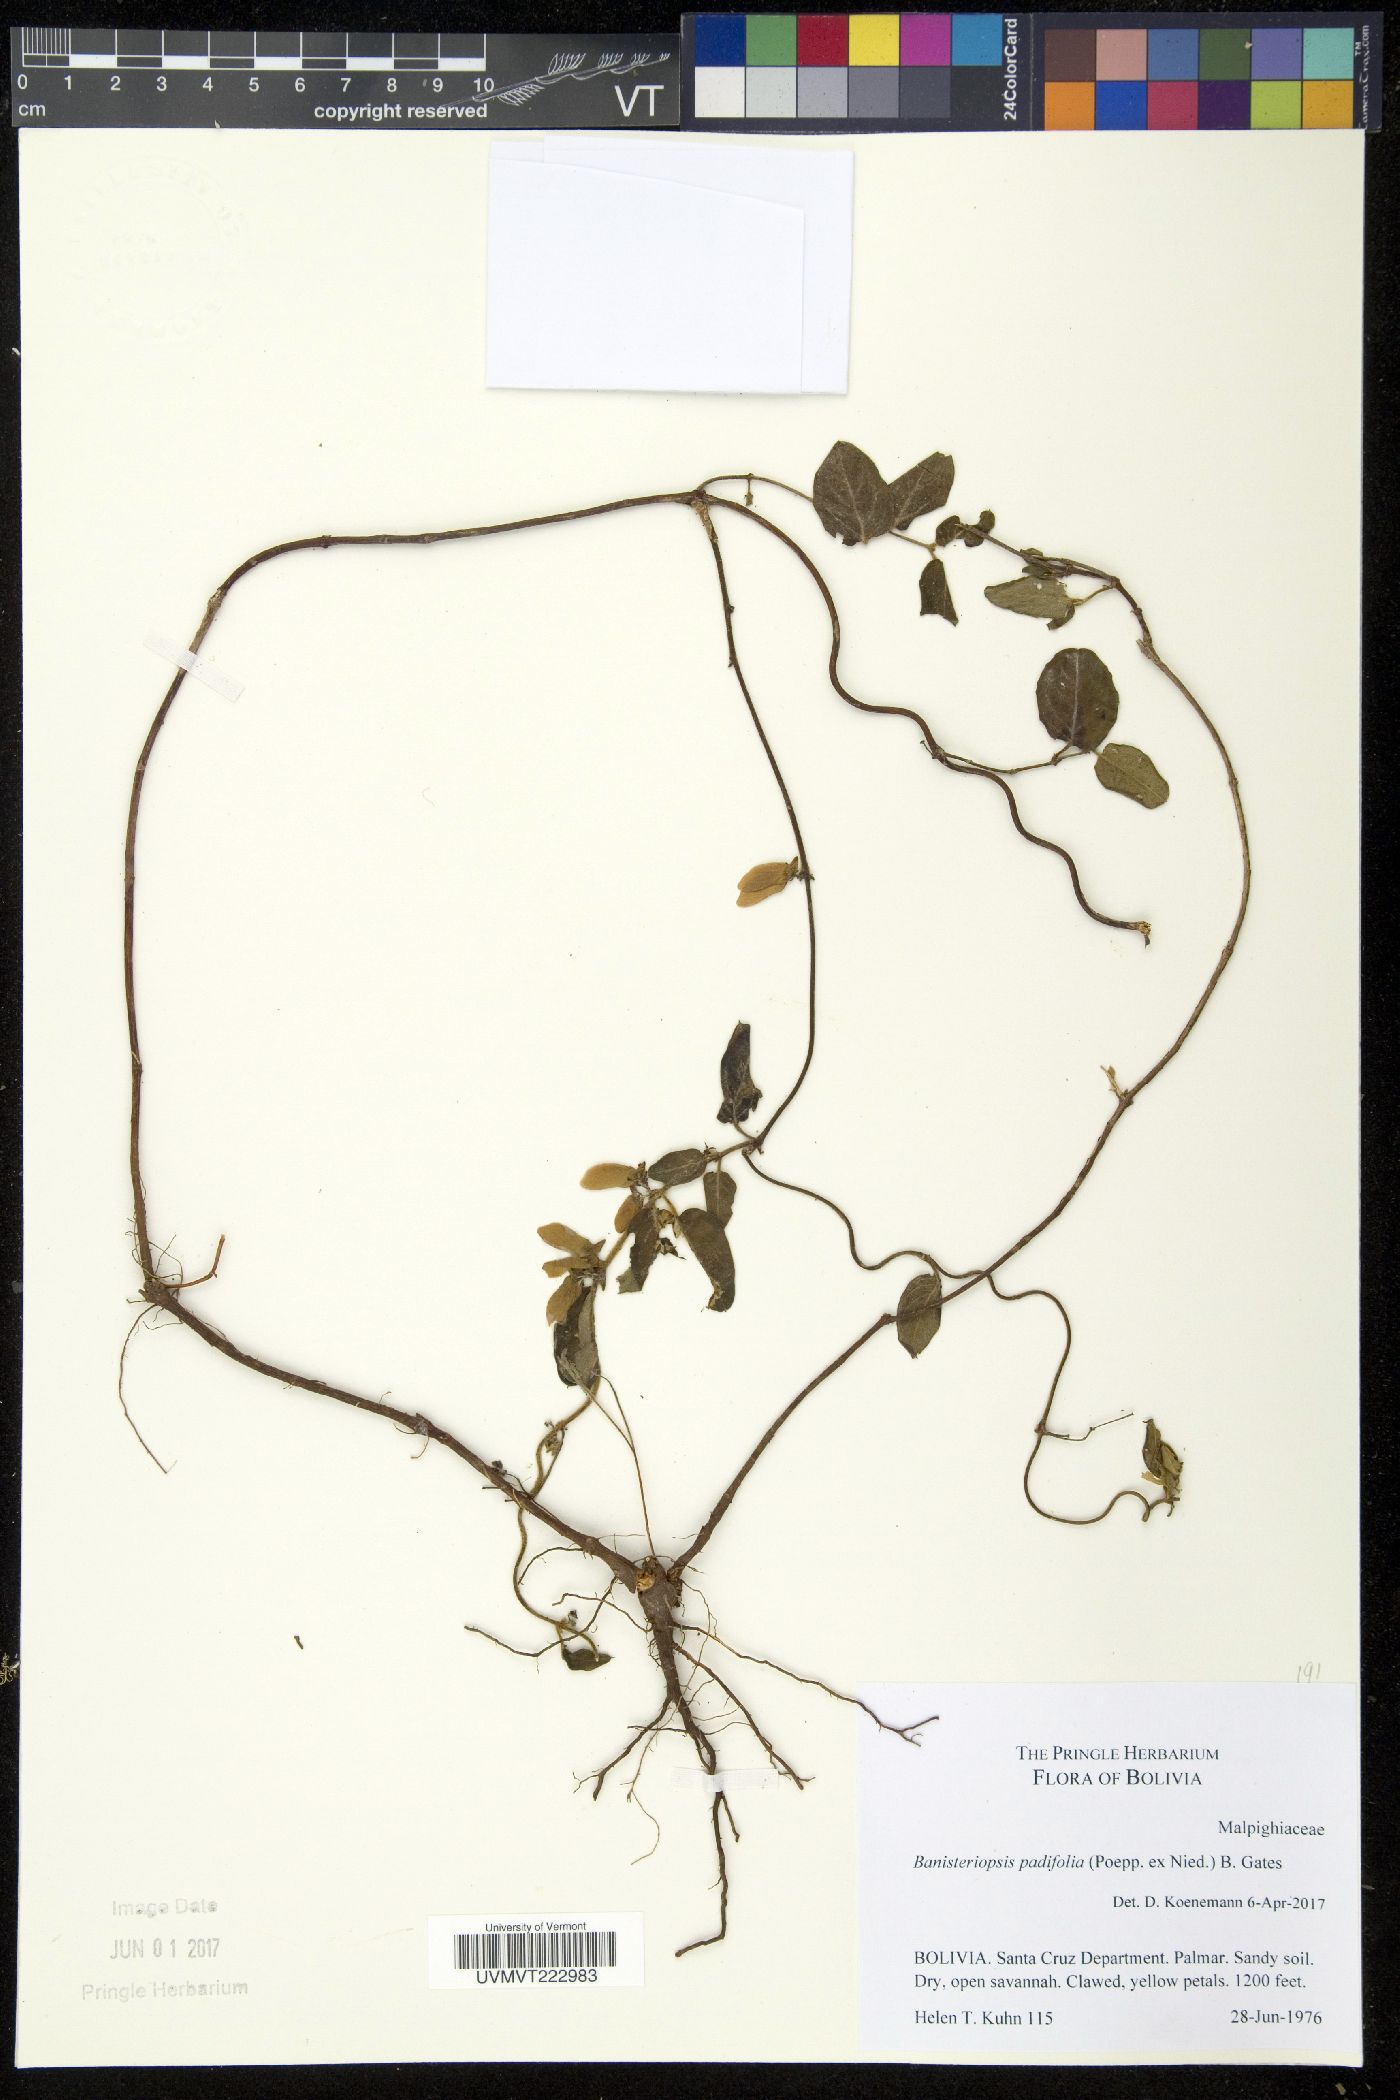 Banisteriopsis image